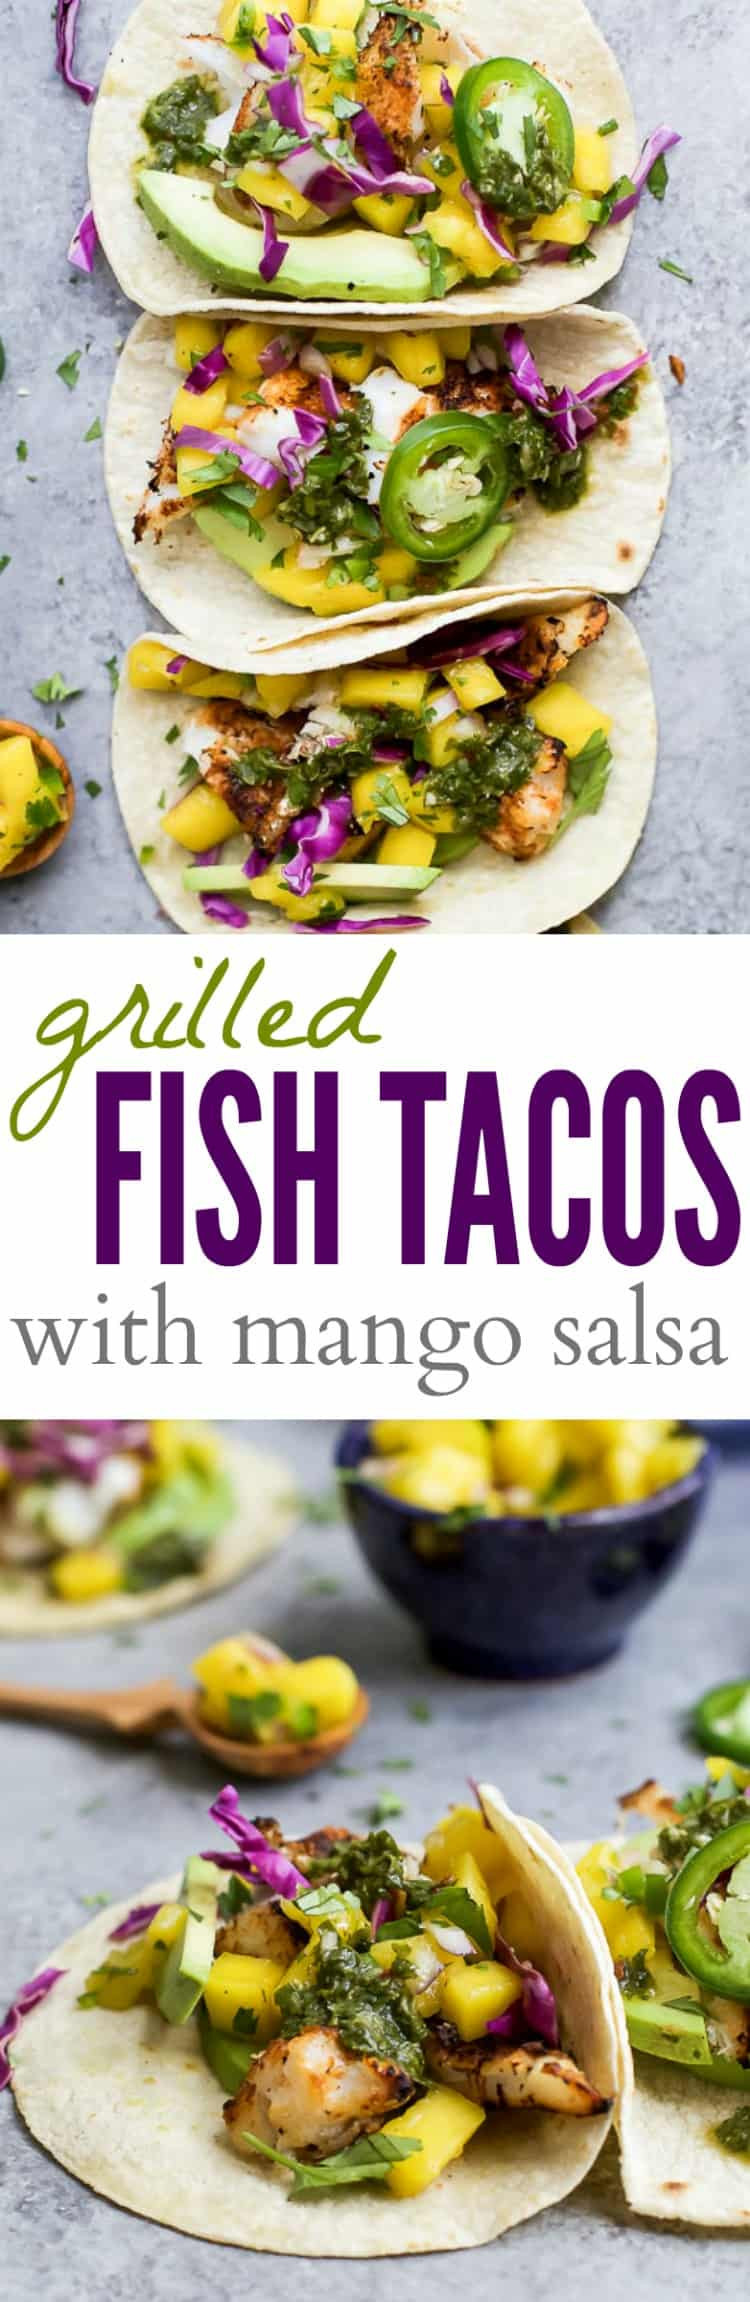 Mango Salsa Recipe For Fish Tacos
 Grilled Fish Tacos with Mango Salsa